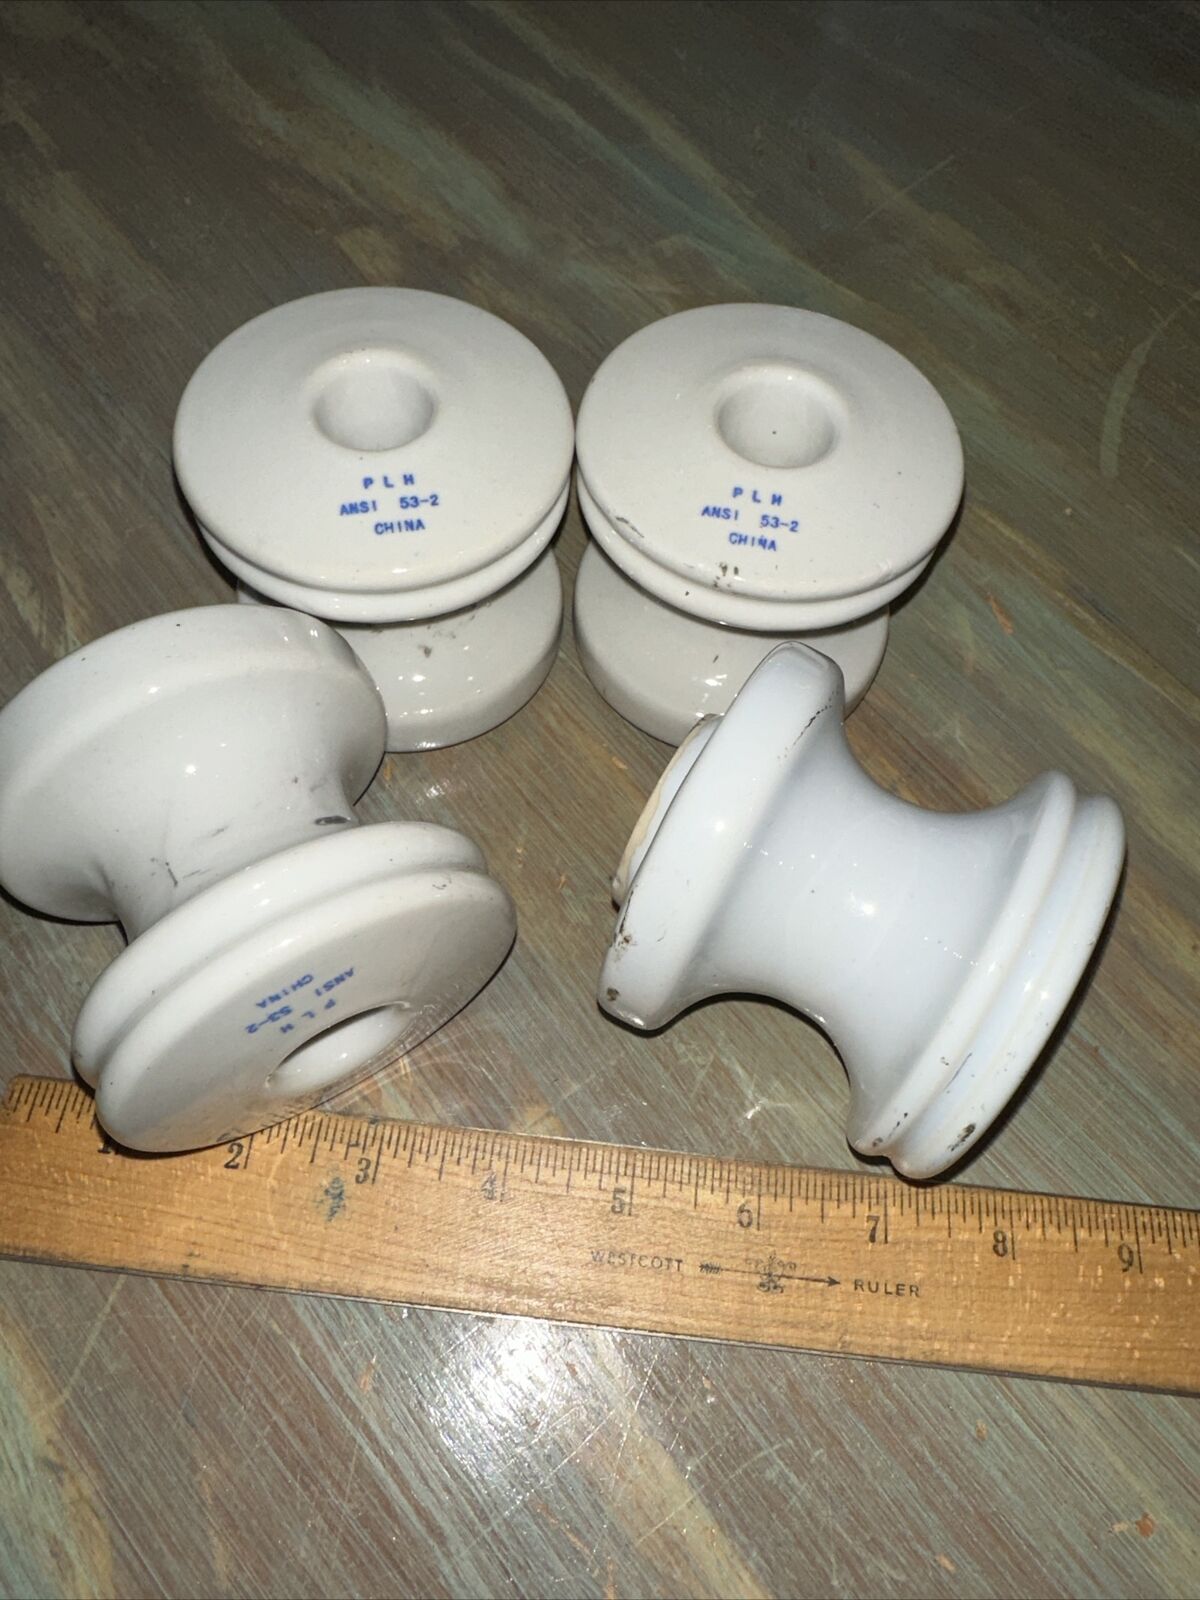 4 Vintage White Ceramic (Porcelain Insulators) Telephone Line Insulators.